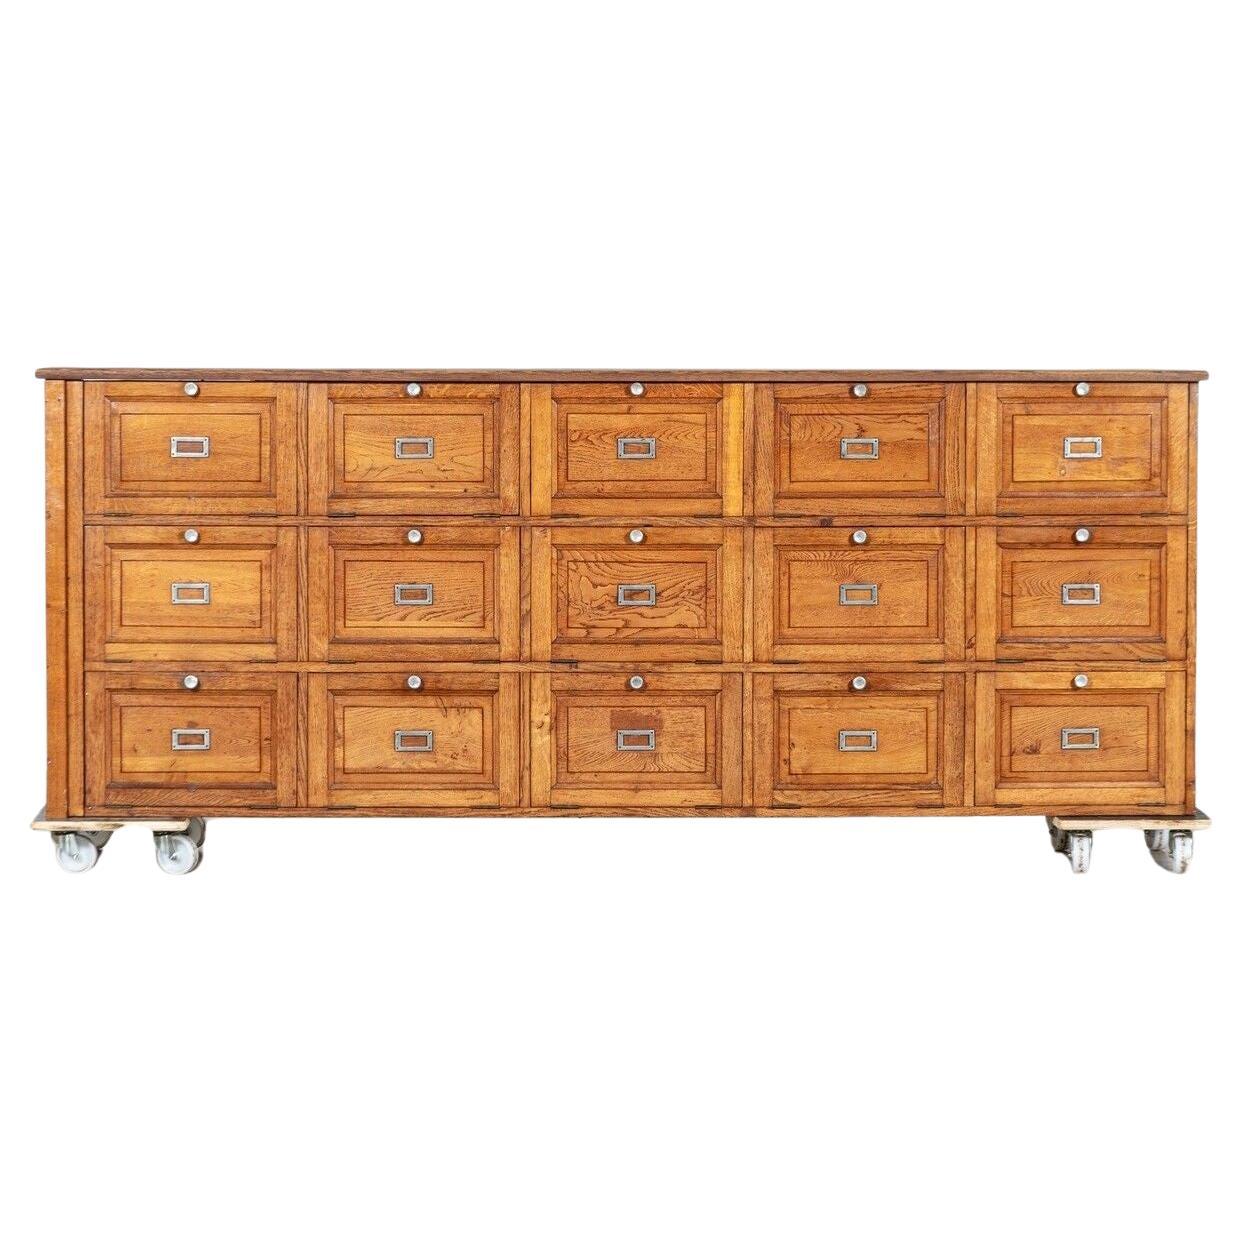 Grands tiroirs / Cabinet / Console Haberdashery en chêne français